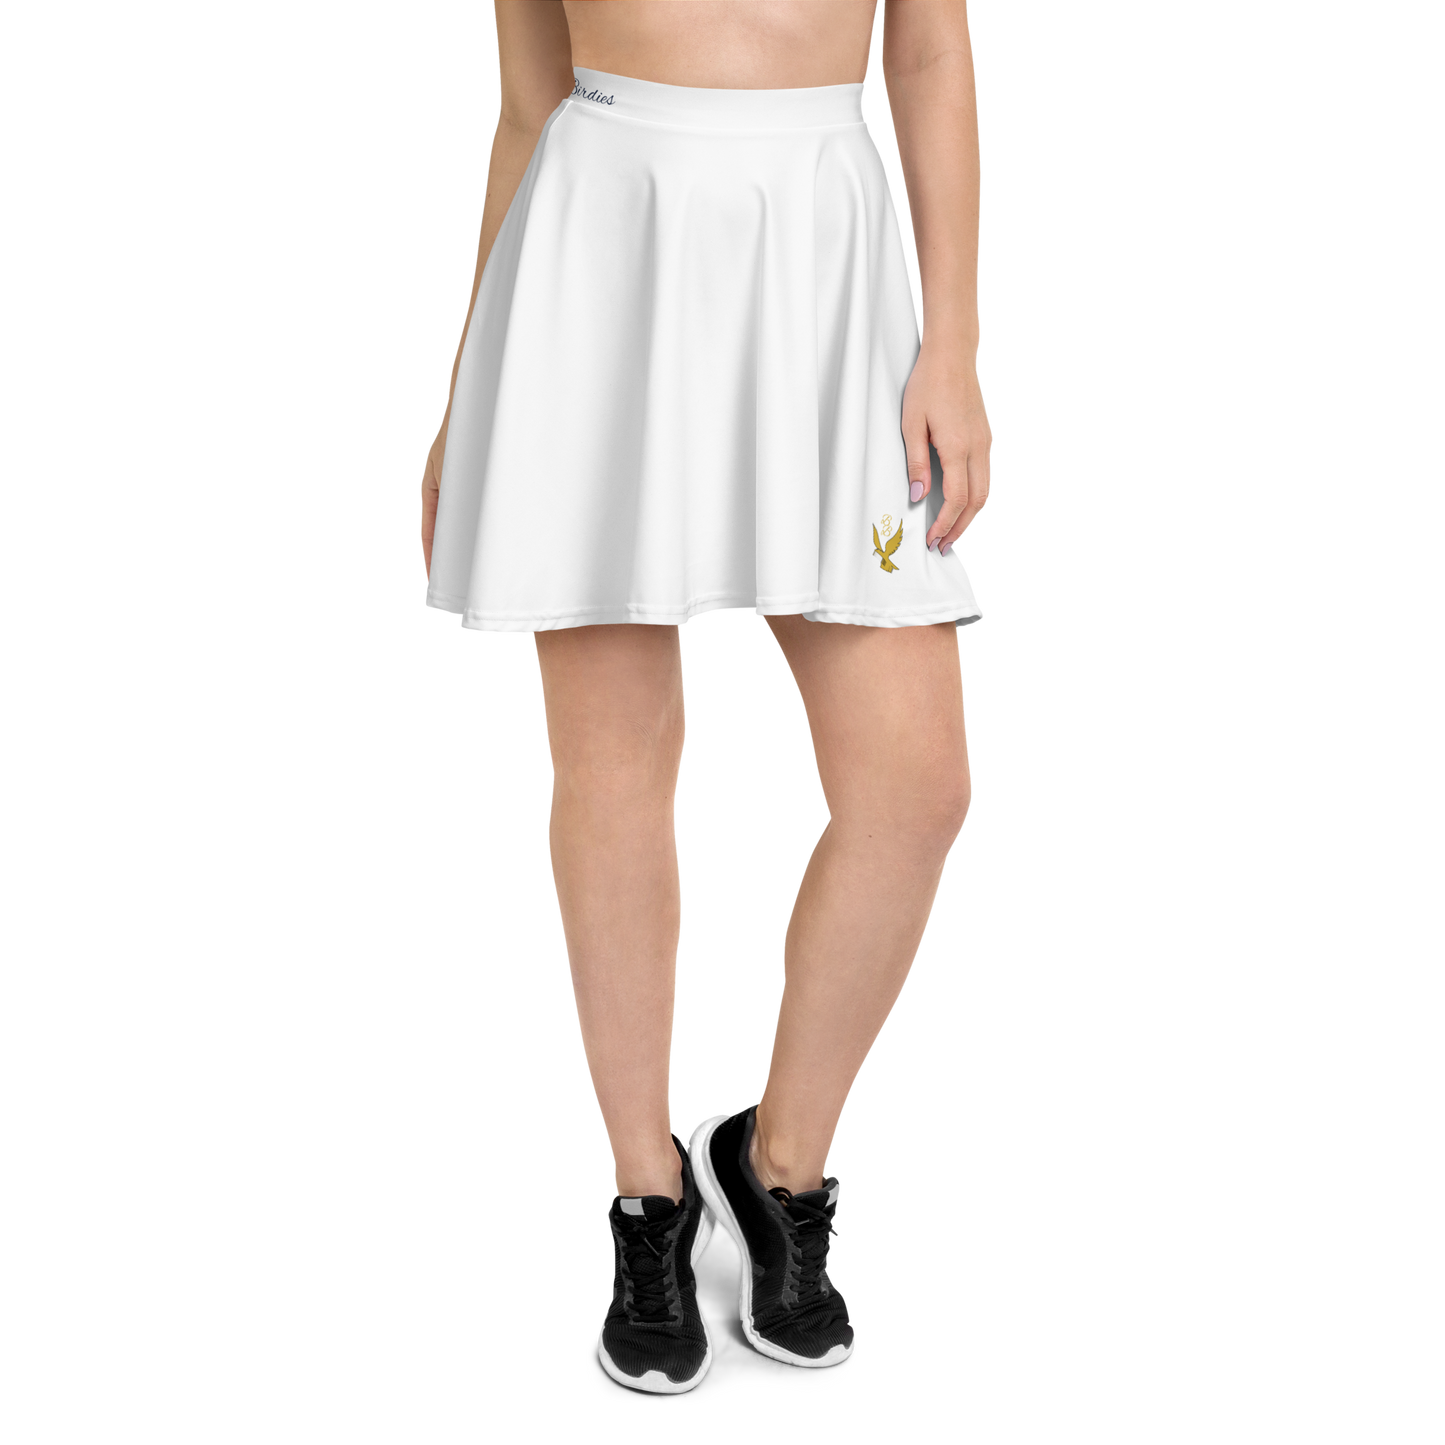 The Women's Glide Golf Skirt